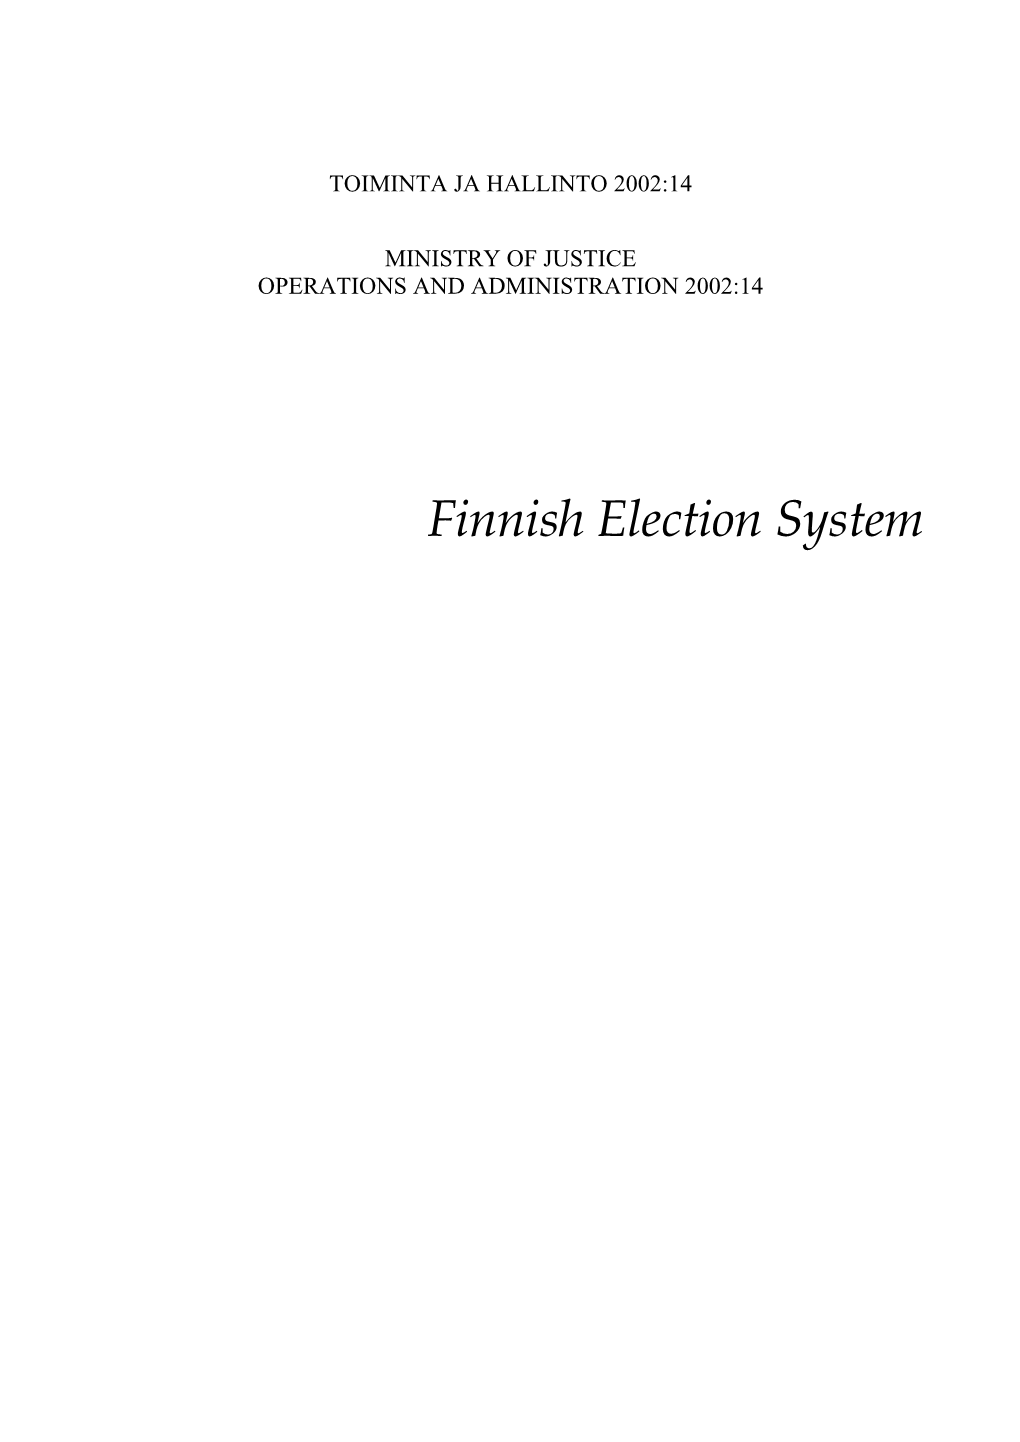 Finnish Election System